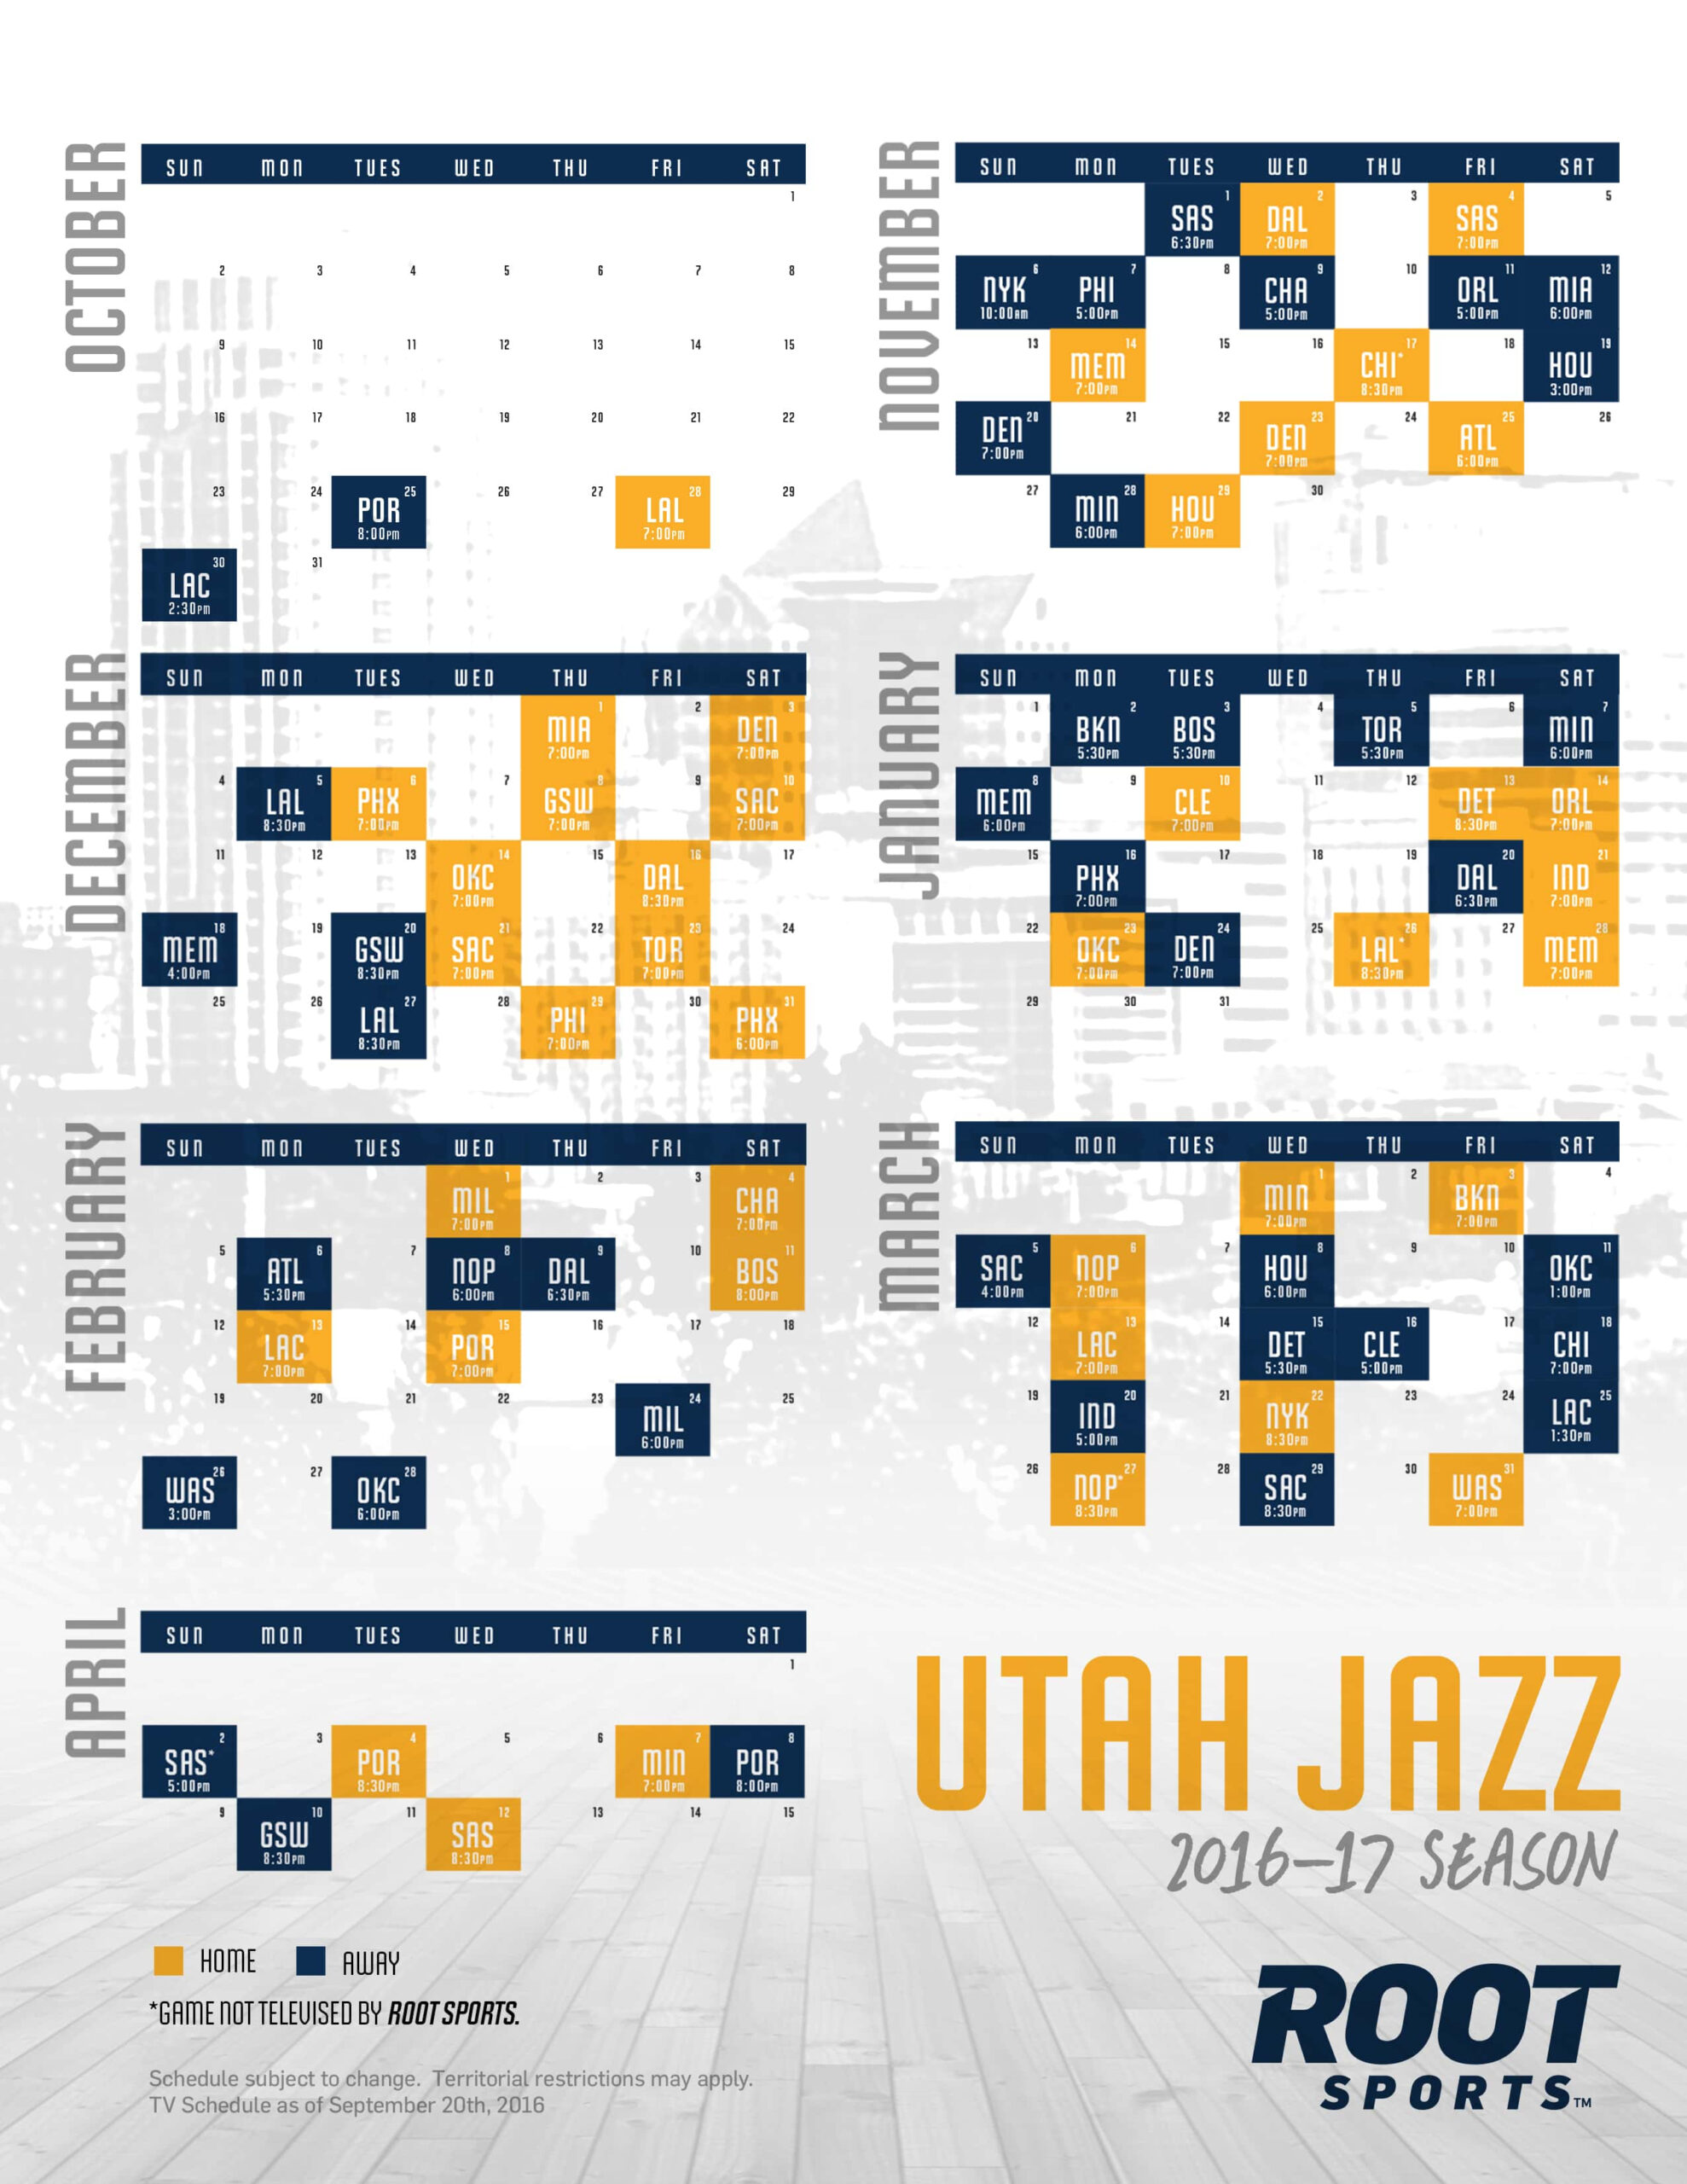 Utah Jazz ROOT SPORTS